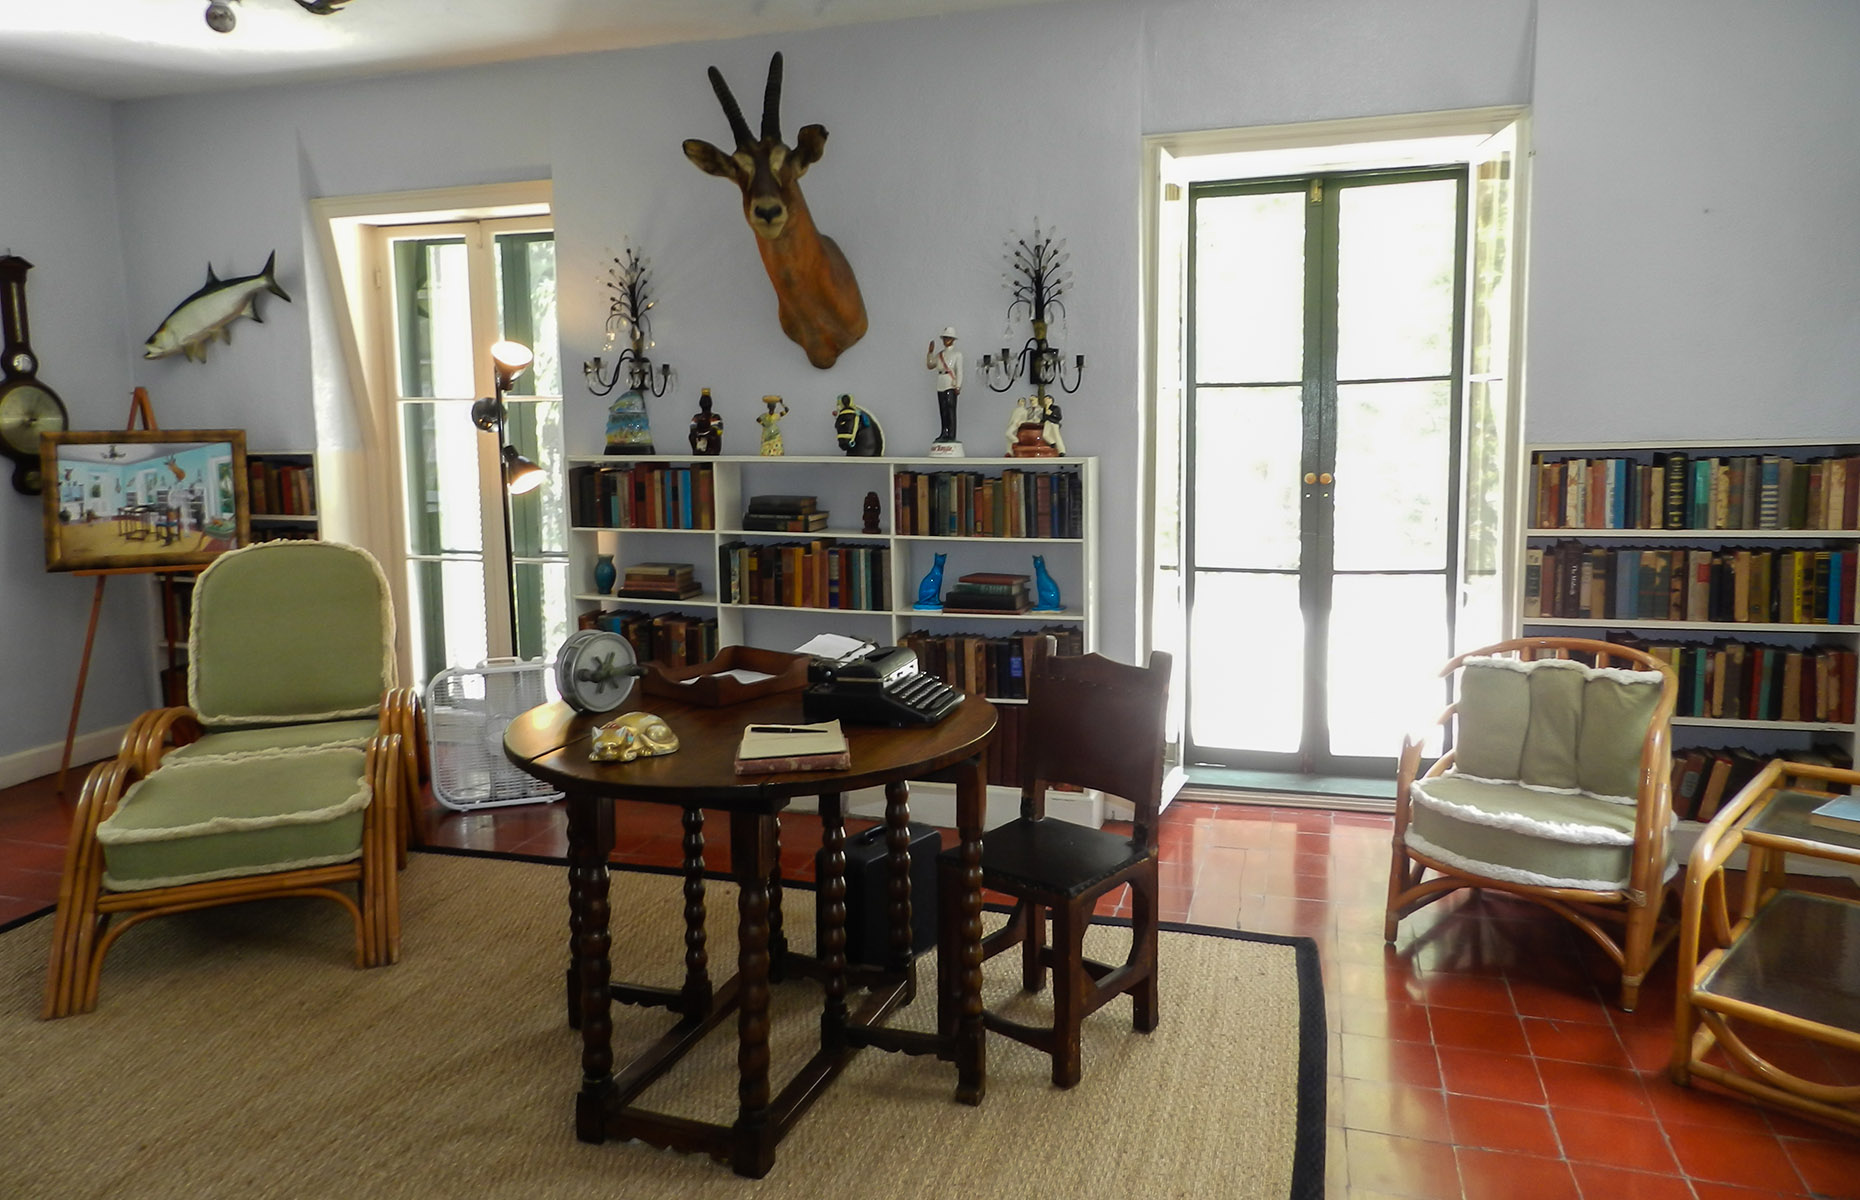 The table at Hemingway House (Image: Luiz Barrionuevo/Shutterstock)